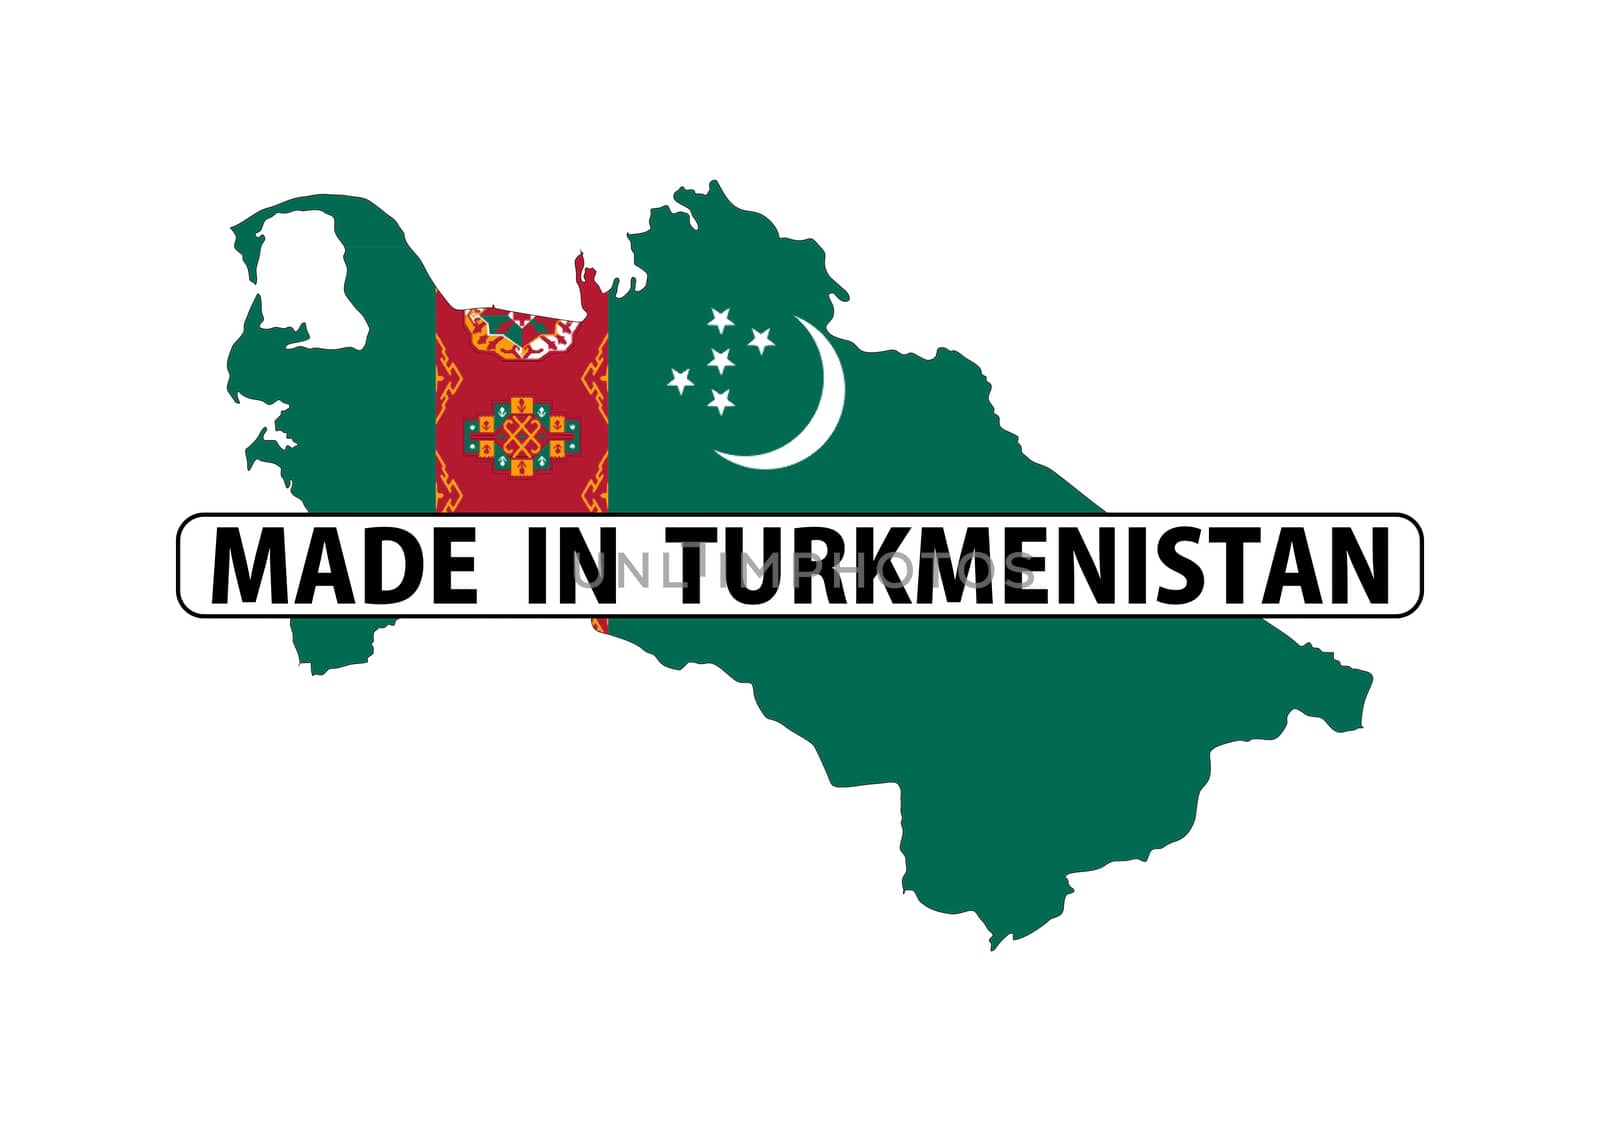 made in turkmenistan by tony4urban